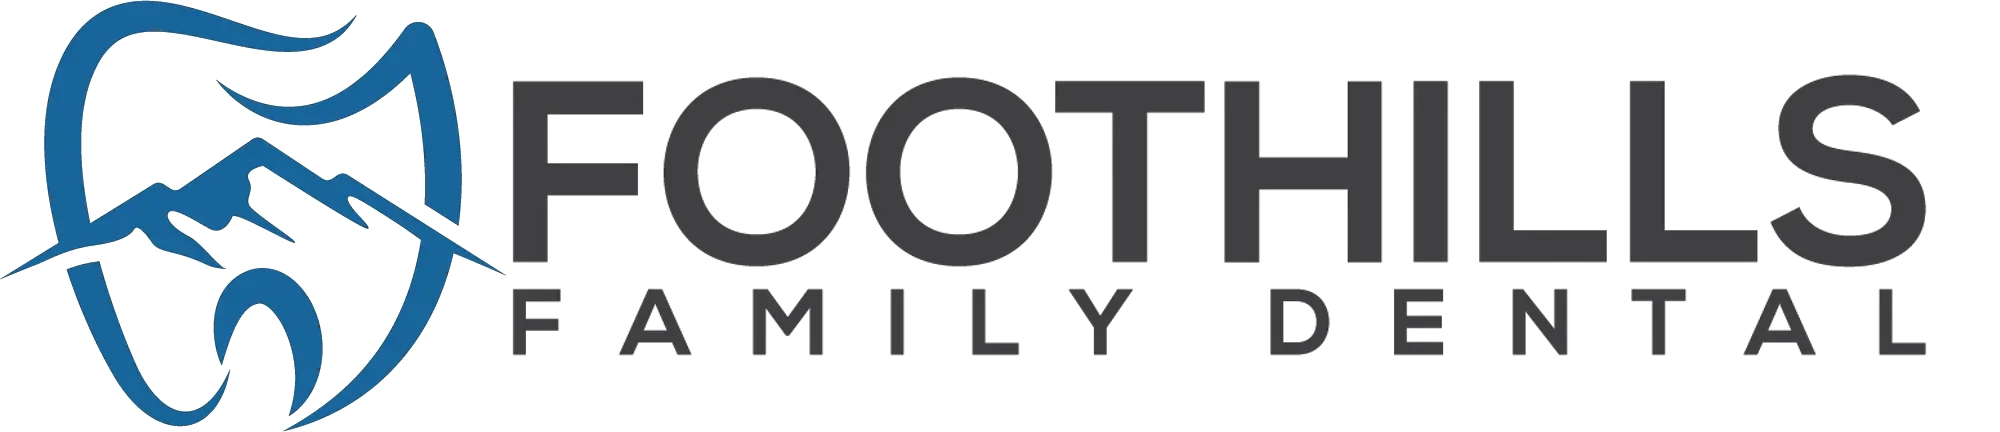 Company logo of Foothills Family Dental